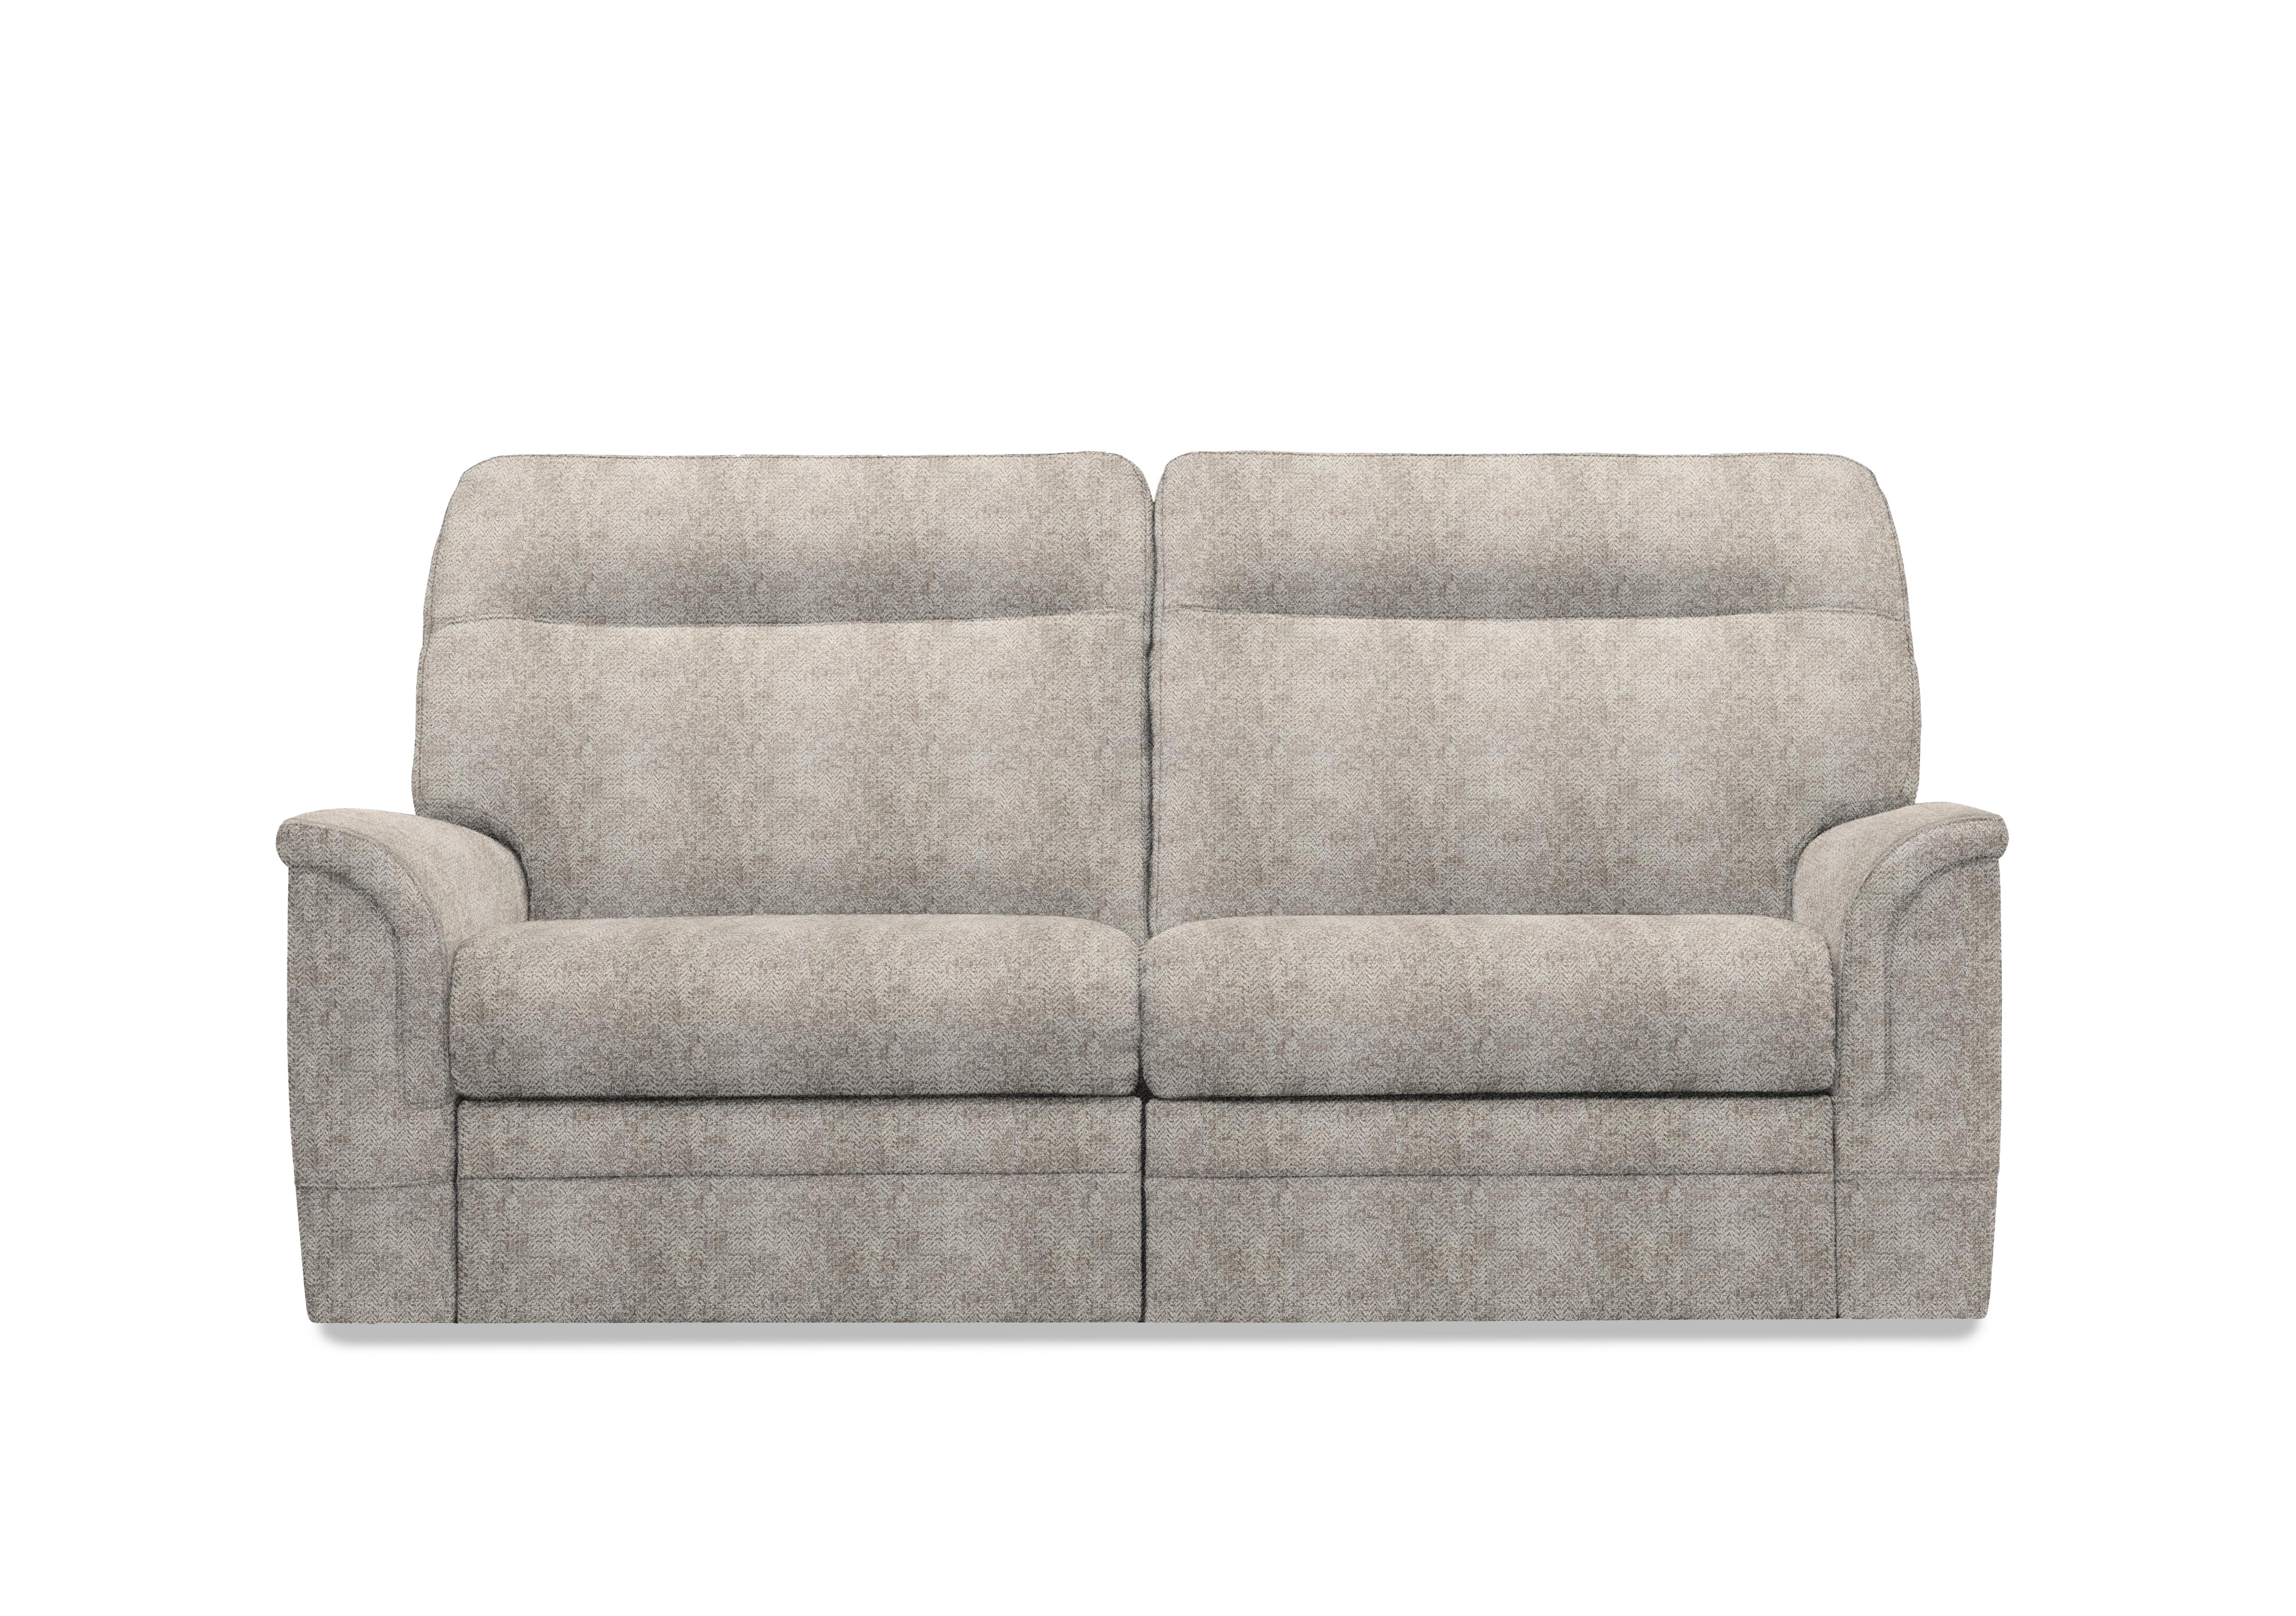 Hudson 23 Large 2 Seater Fabric Sofa in Ida Stone 006035-0055 on Furniture Village